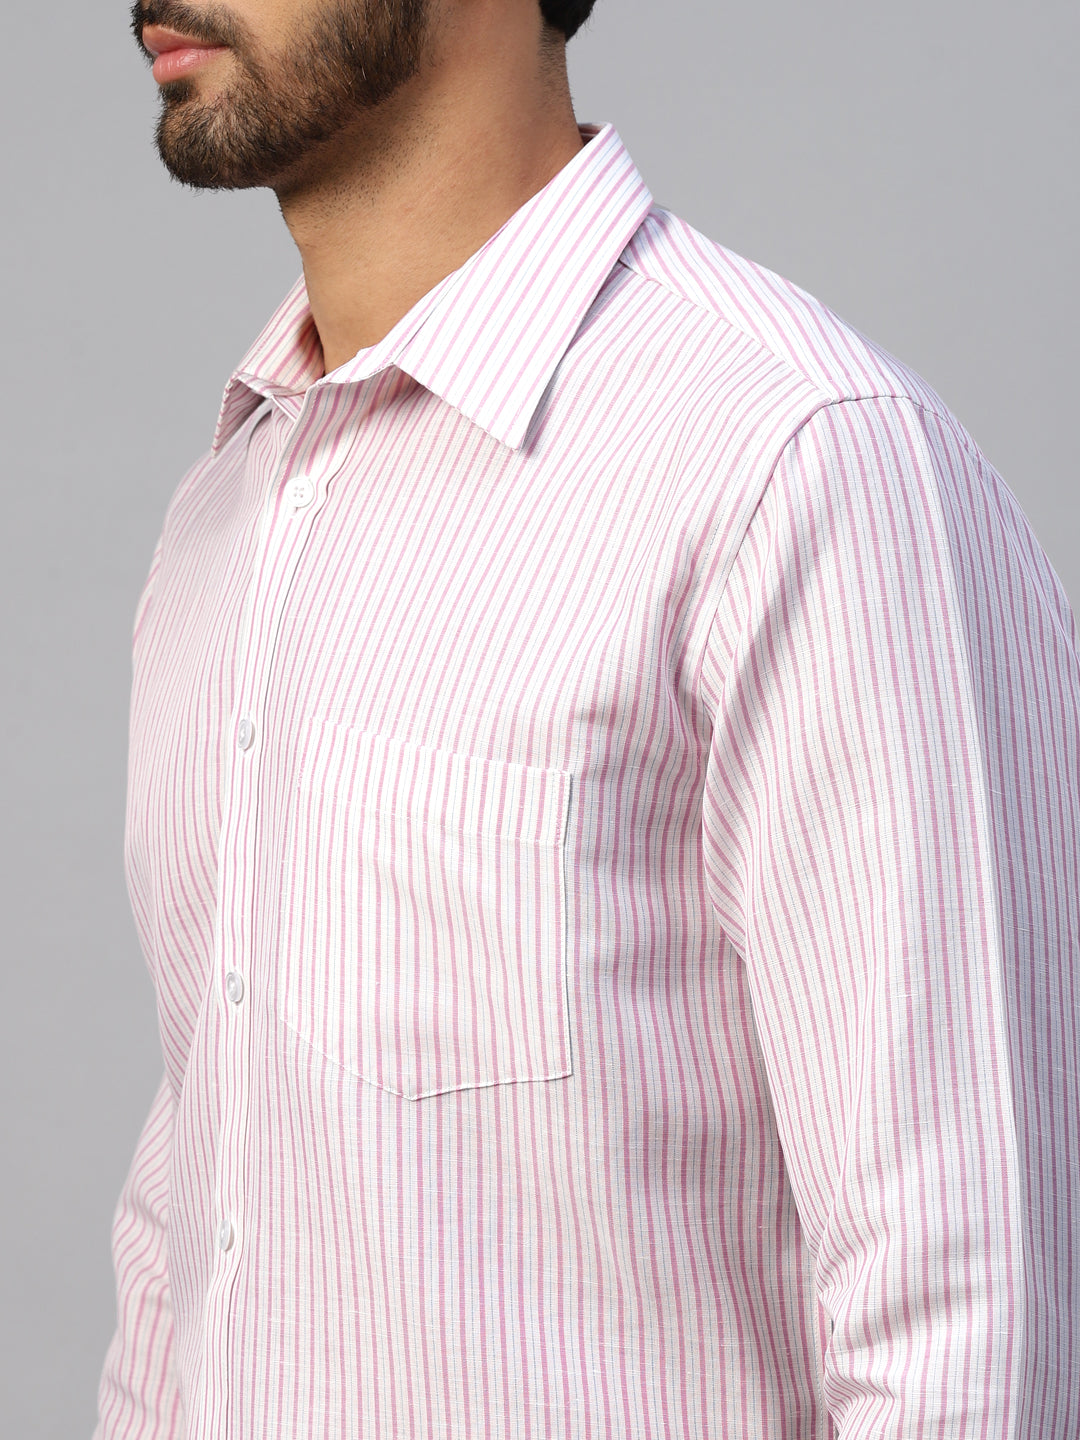 Men's Pink & White Stripes Formal Shirt